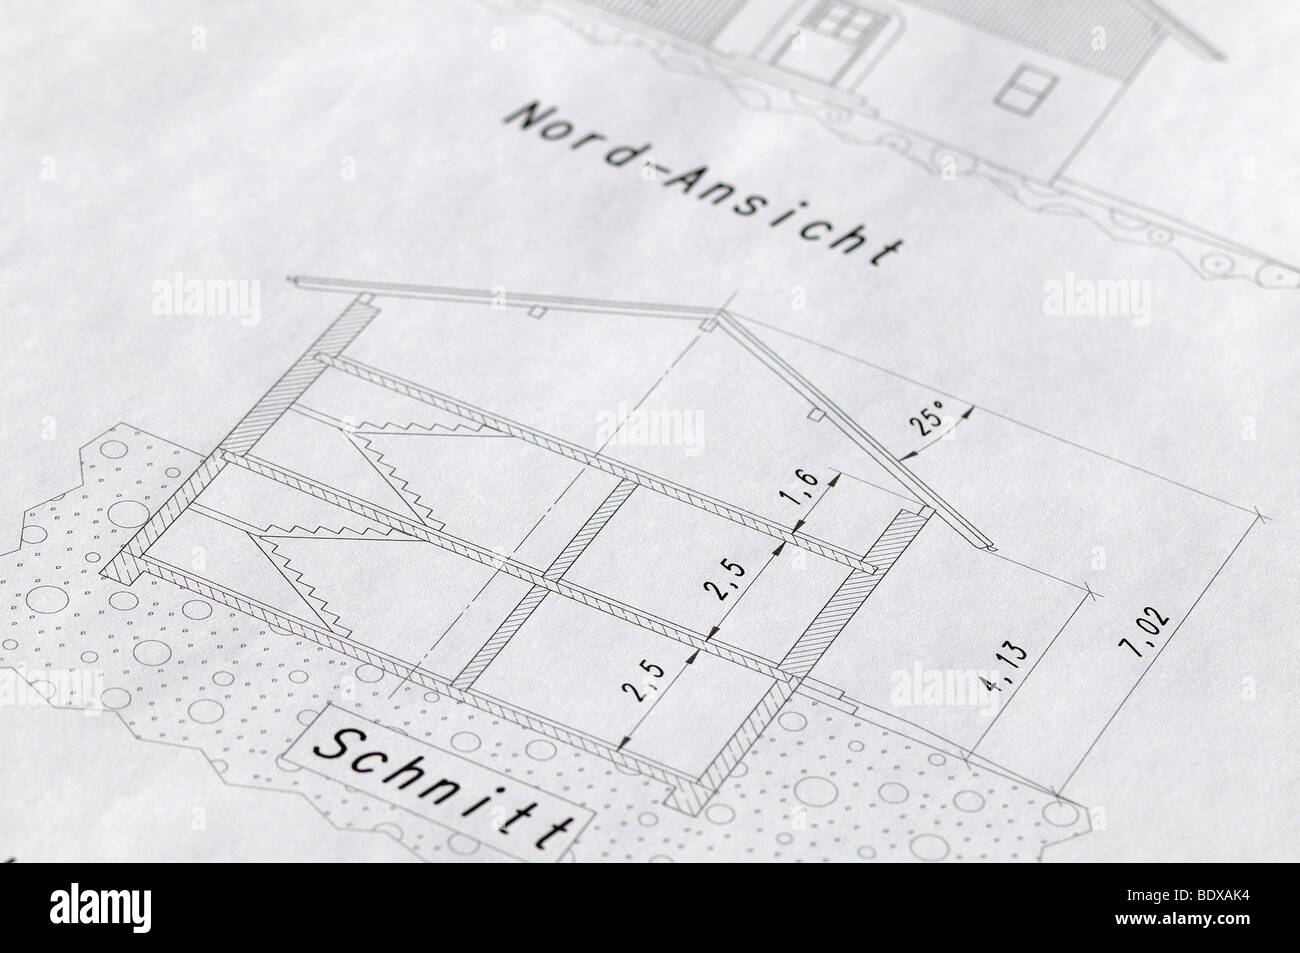 Architectural plan, detail Stock Photo